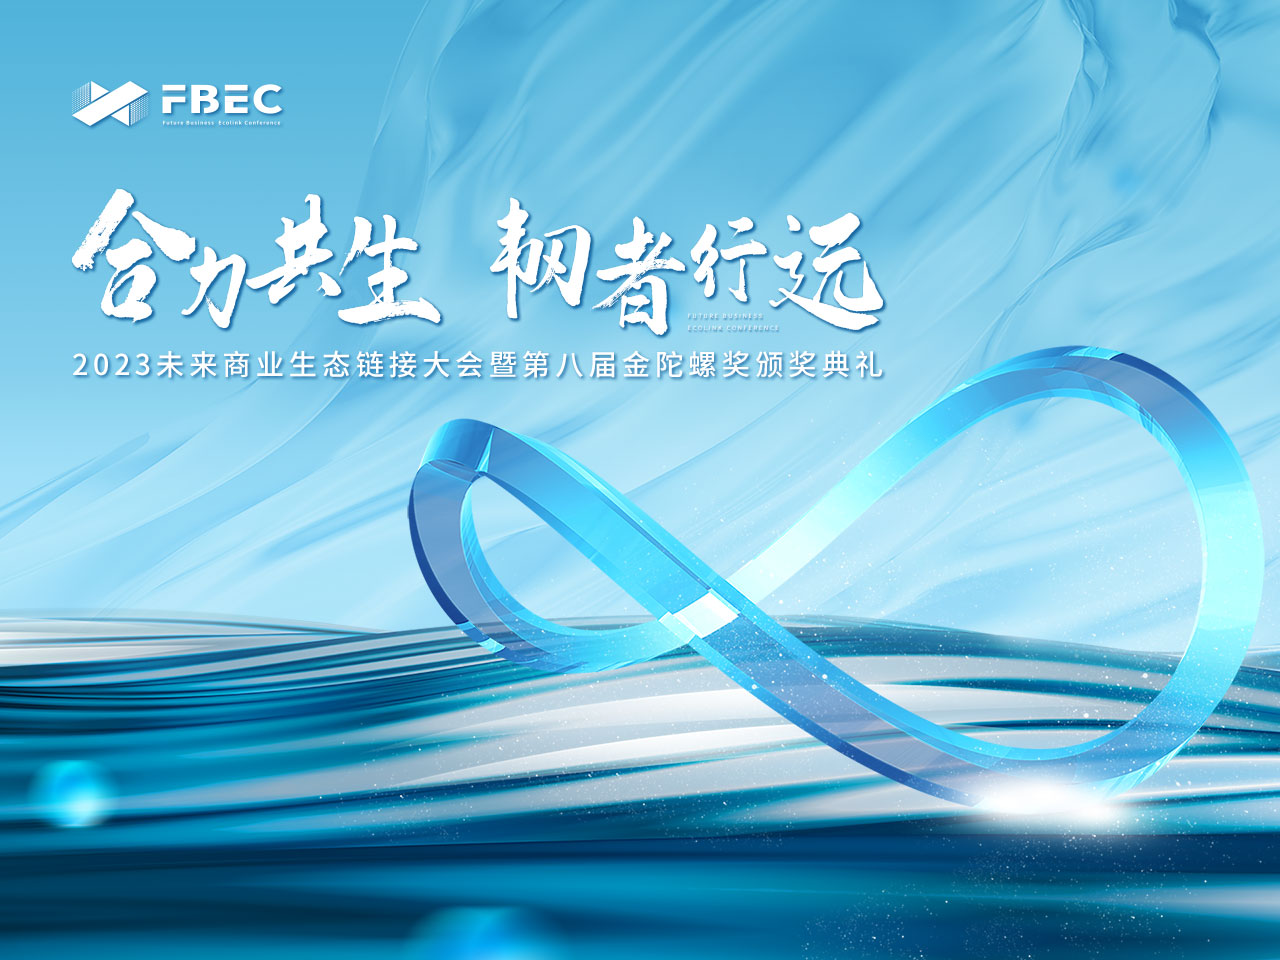 FBEC2023 | 视涯科技 联合创始人 刘波确认出席并发表主题演讲